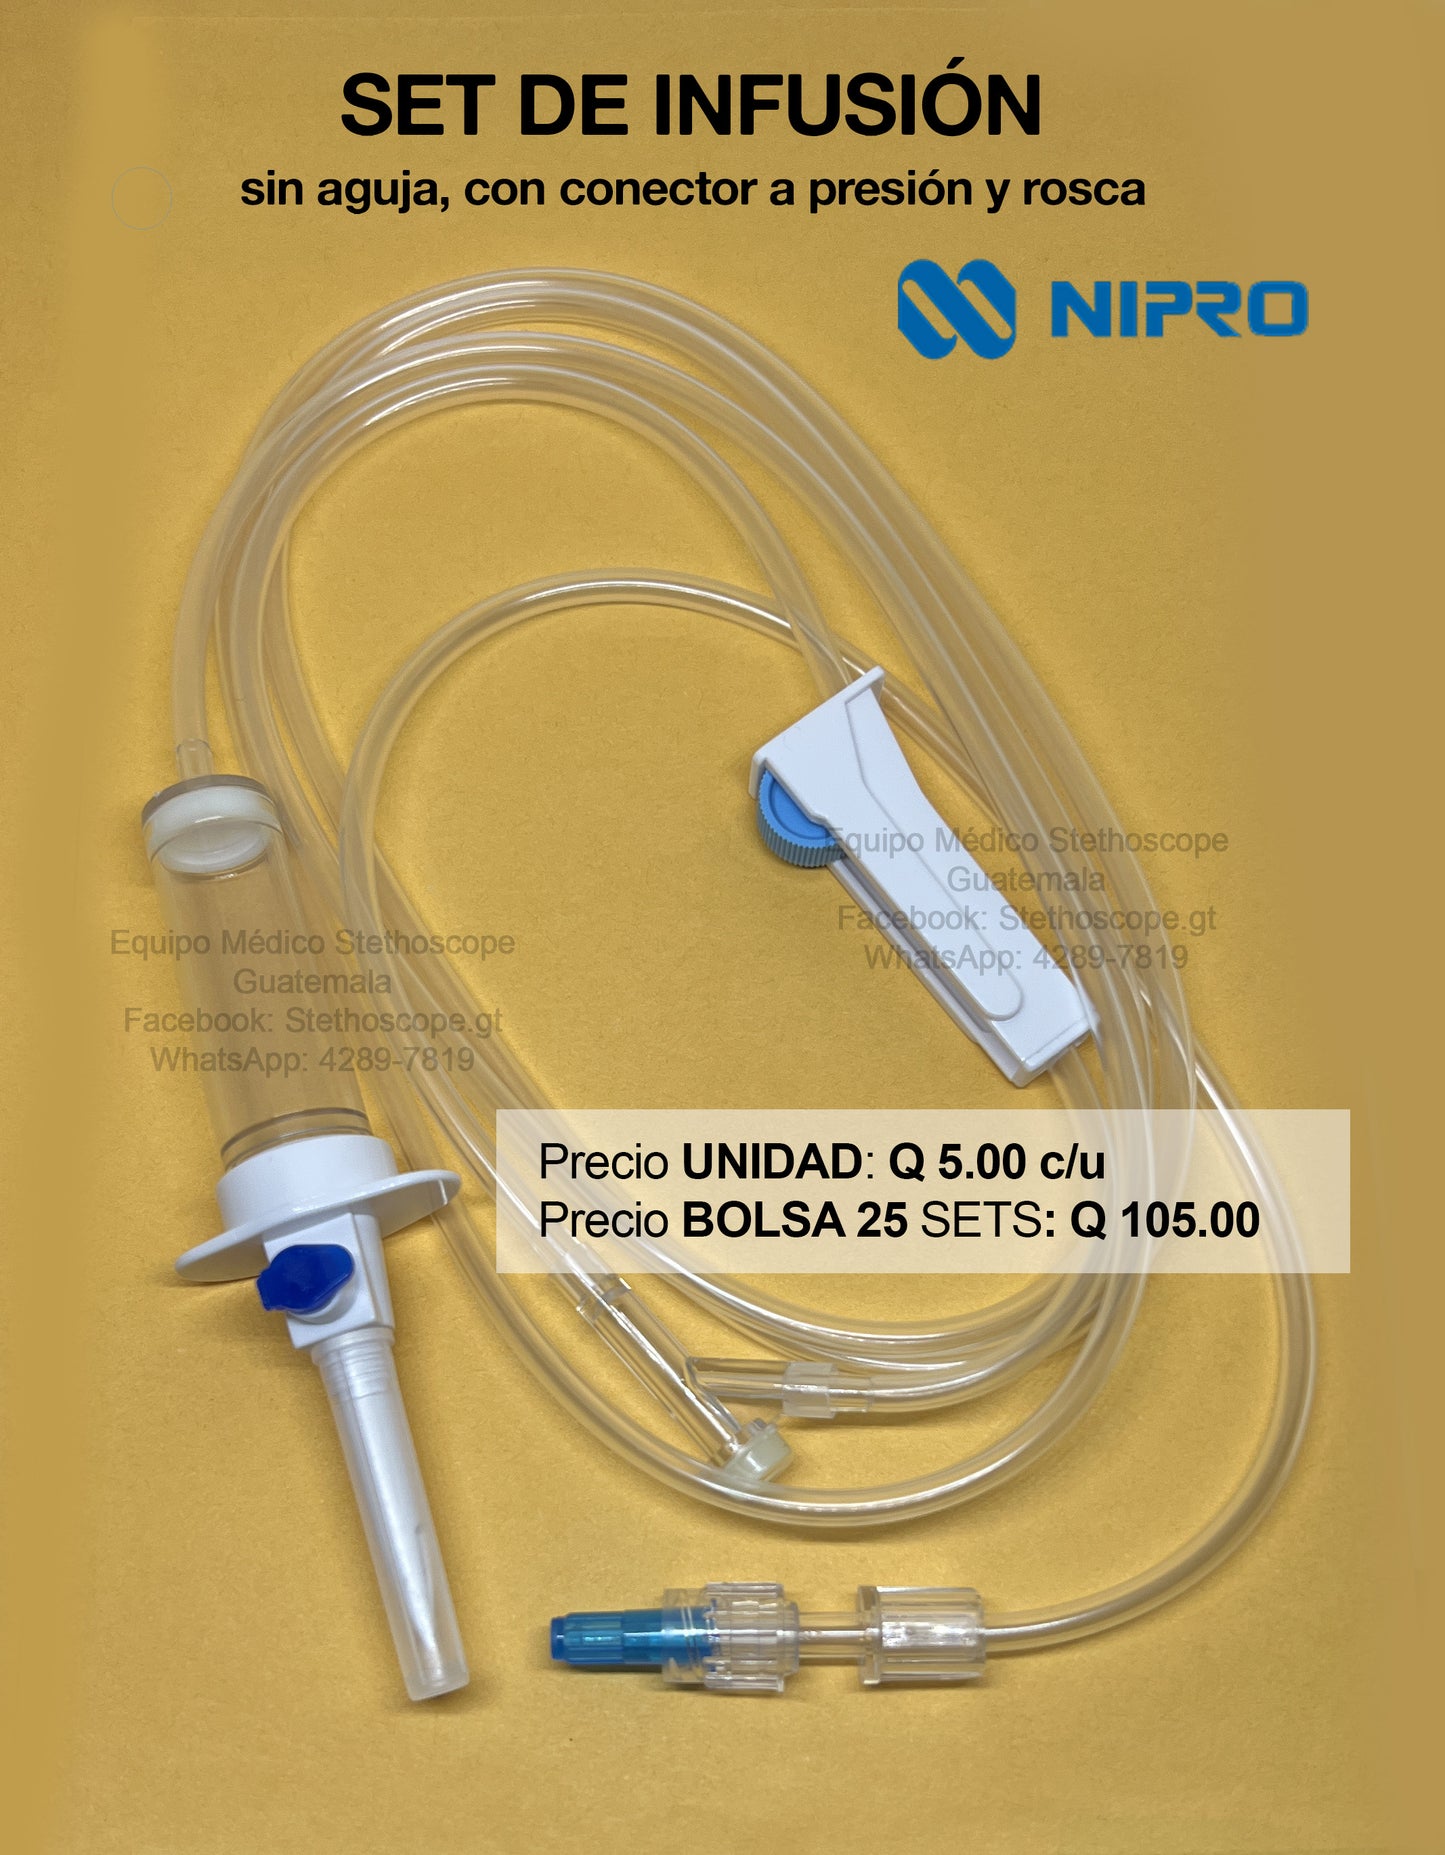 Bandeja de acero - Equipo Médico Stethoscope - Guatemala